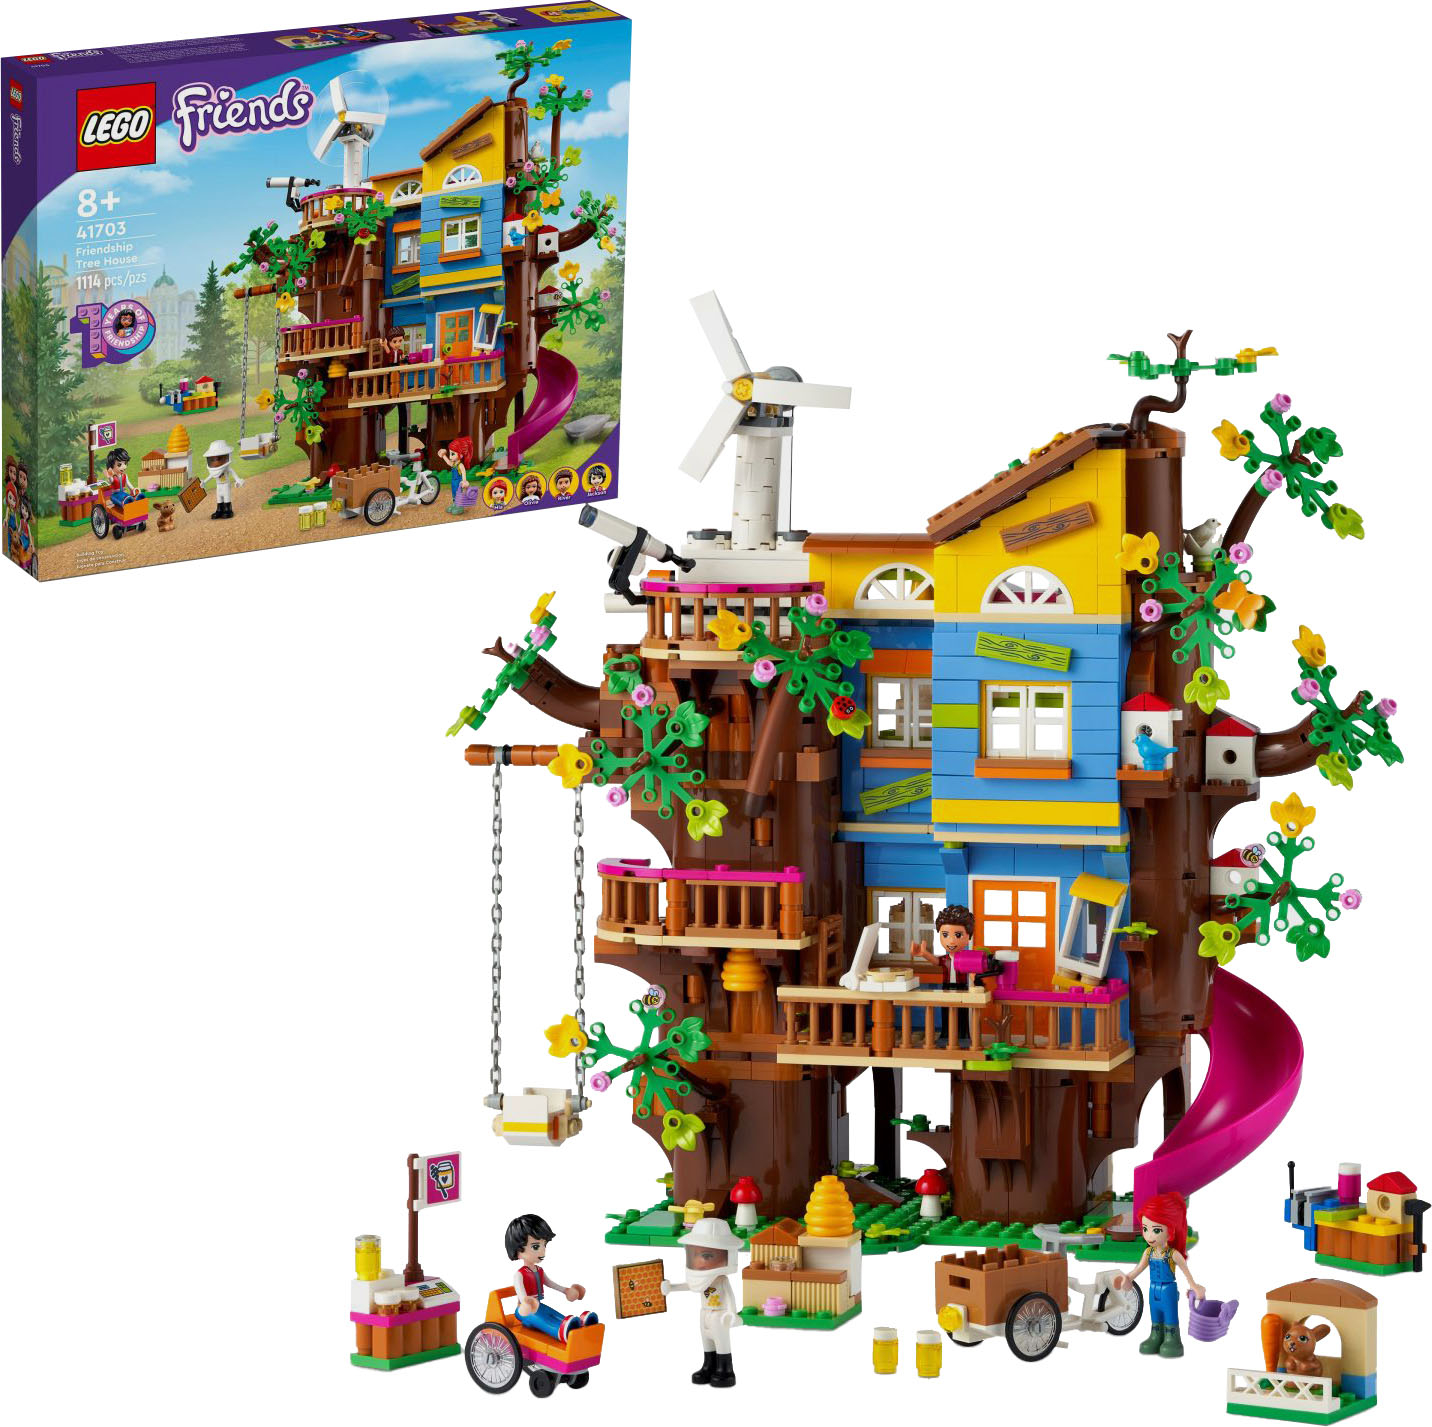 usund Outlook shabby LEGO Friends Friendship Tree House 41703 6379083 - Best Buy